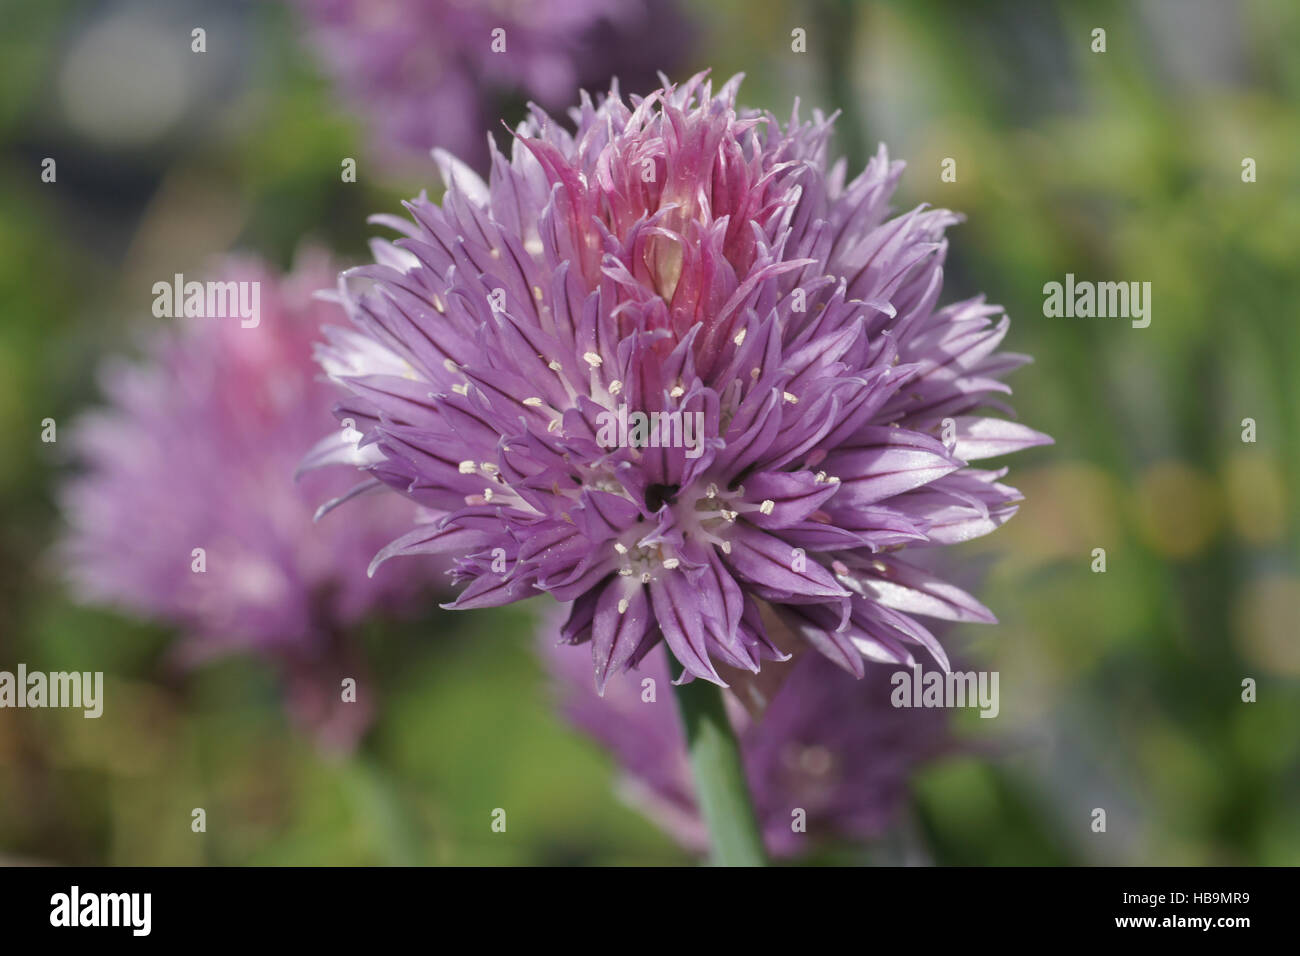 Allium schoenoprasum, Chives Stock Photo